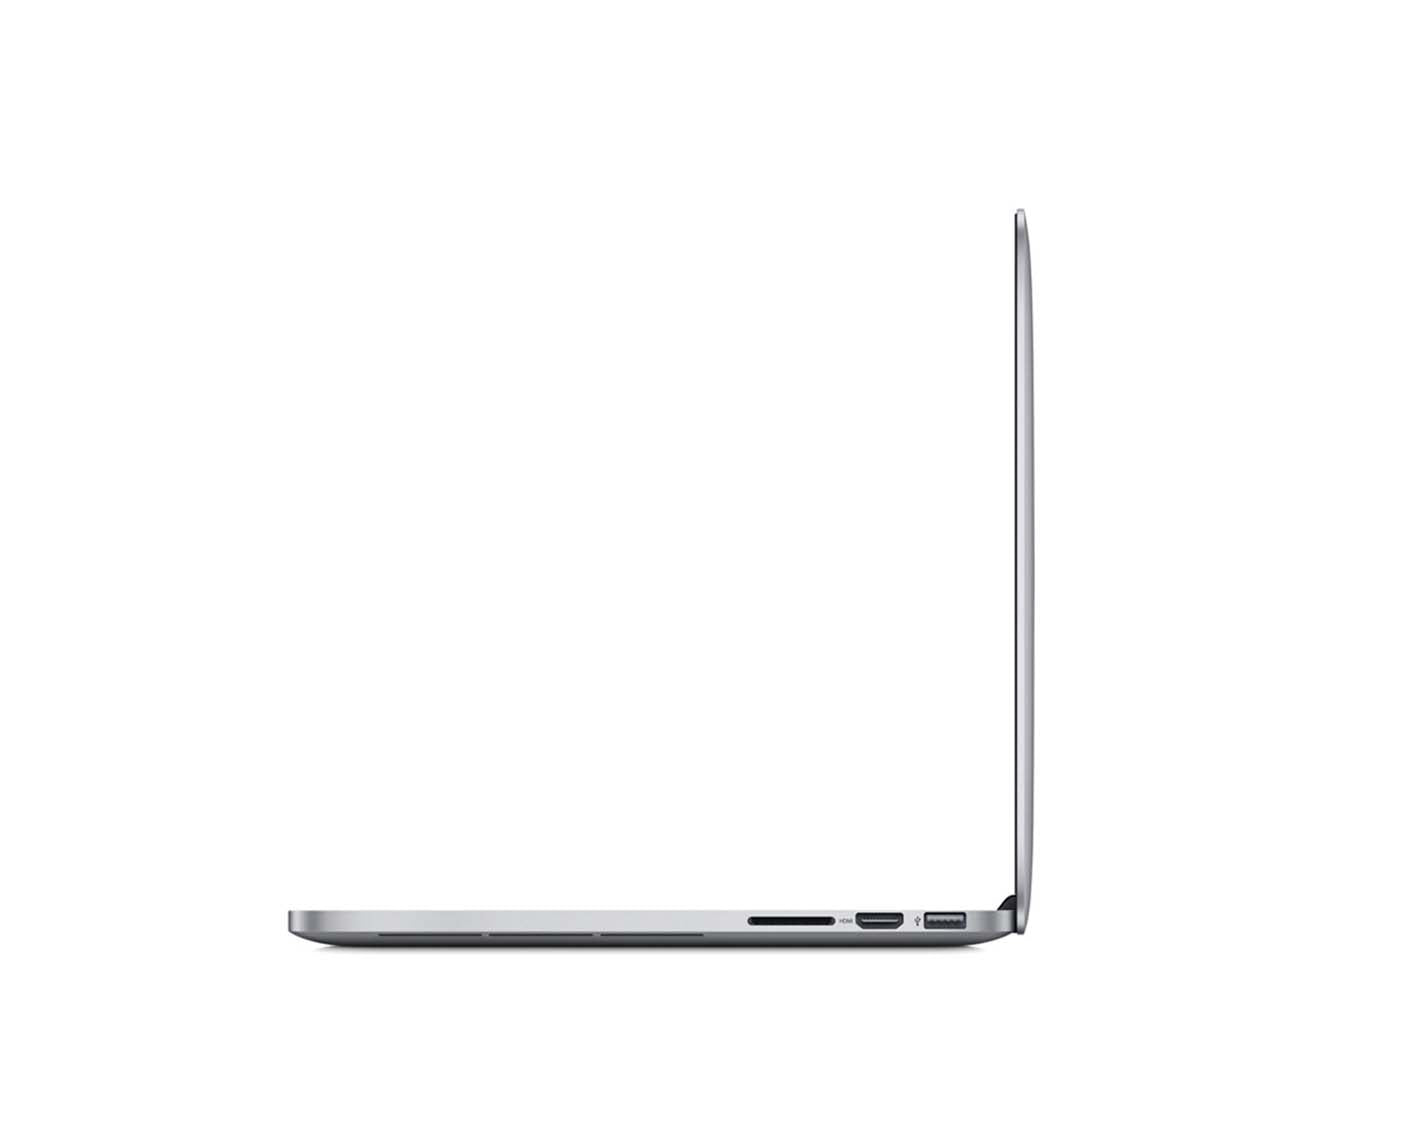 Macbook Pro Retina 13-inch - 2015 - 2.9GHz i5